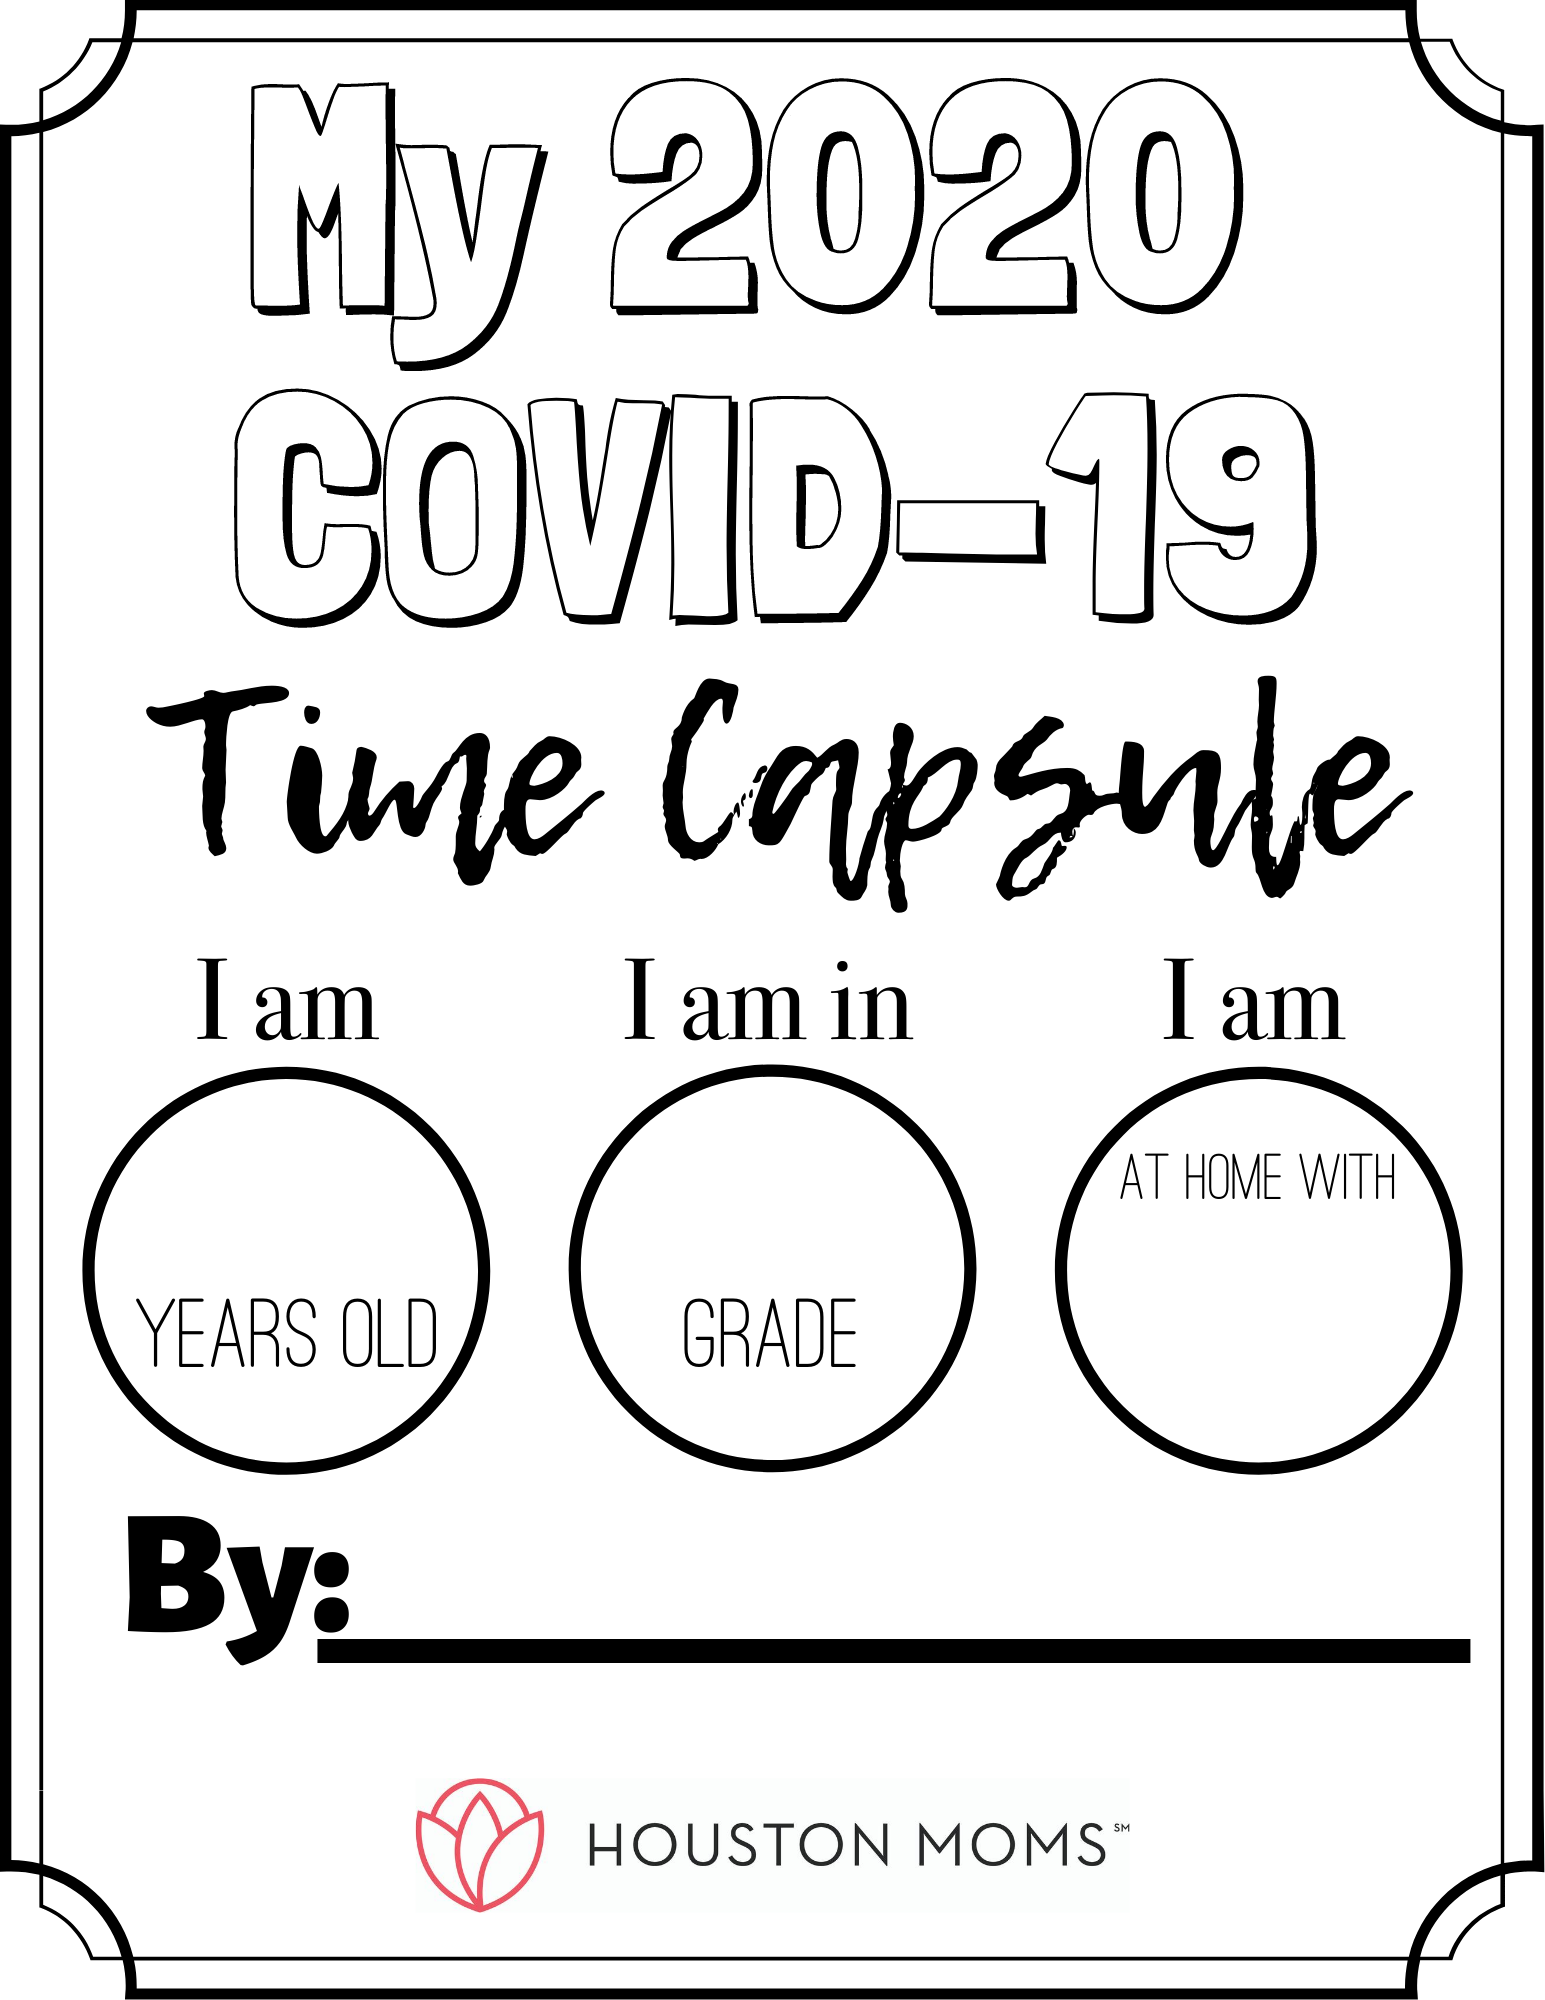 Houston Mom "My 2020 COVID-19 Time Capsule" #houstonmoms #houstonmomsblog #momsaroundhouston